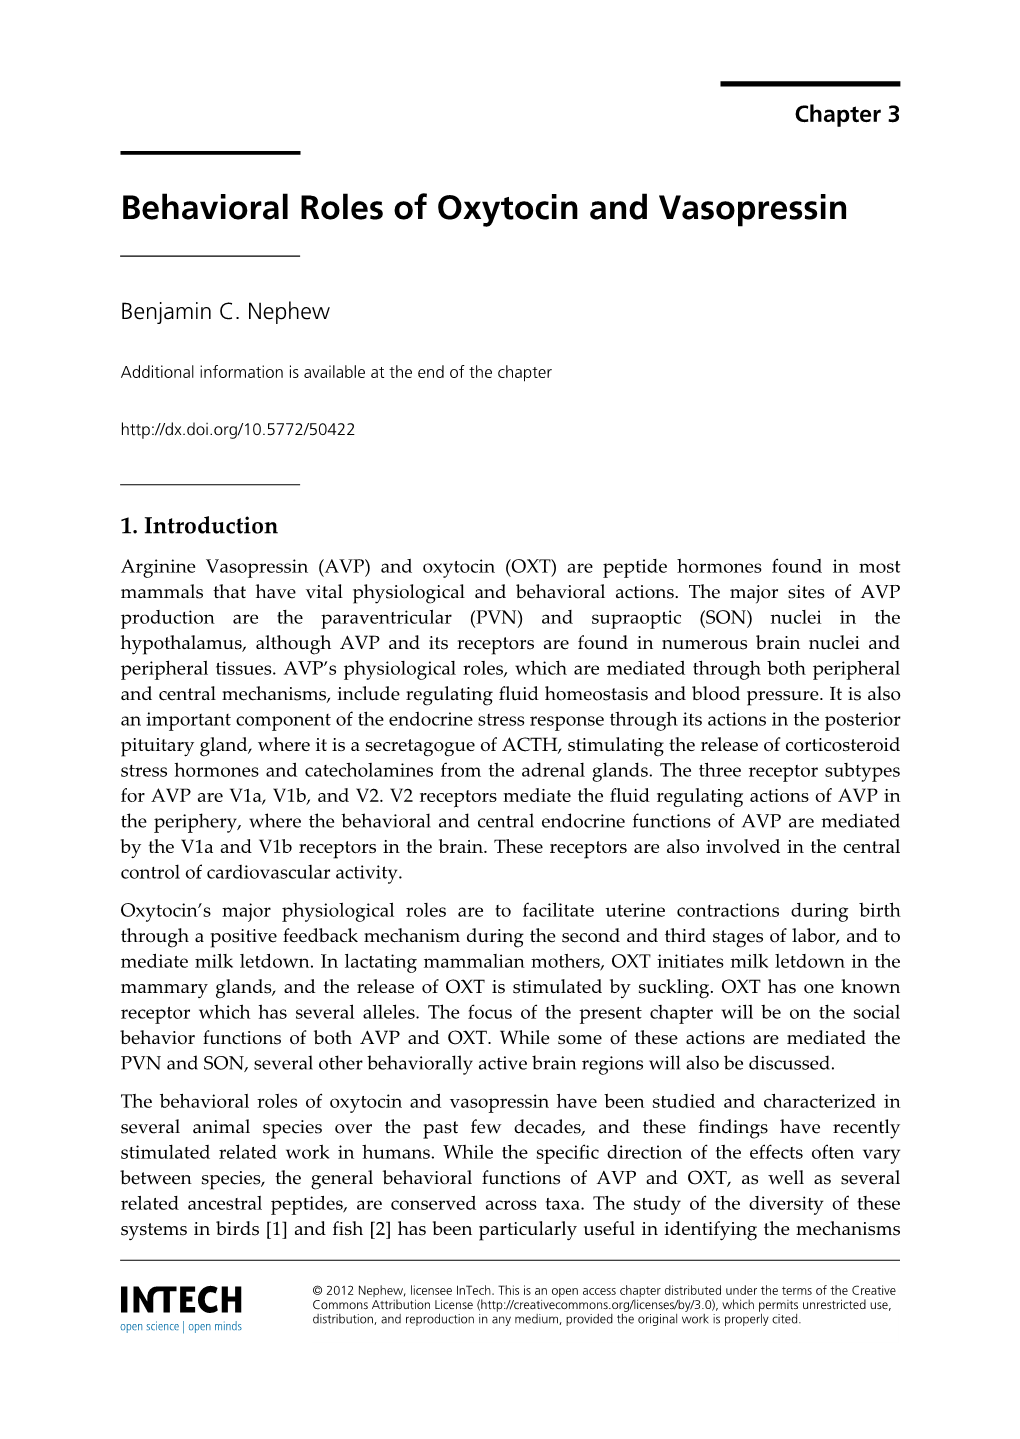 Behavioral Roles of Oxytocin and Vasopressin